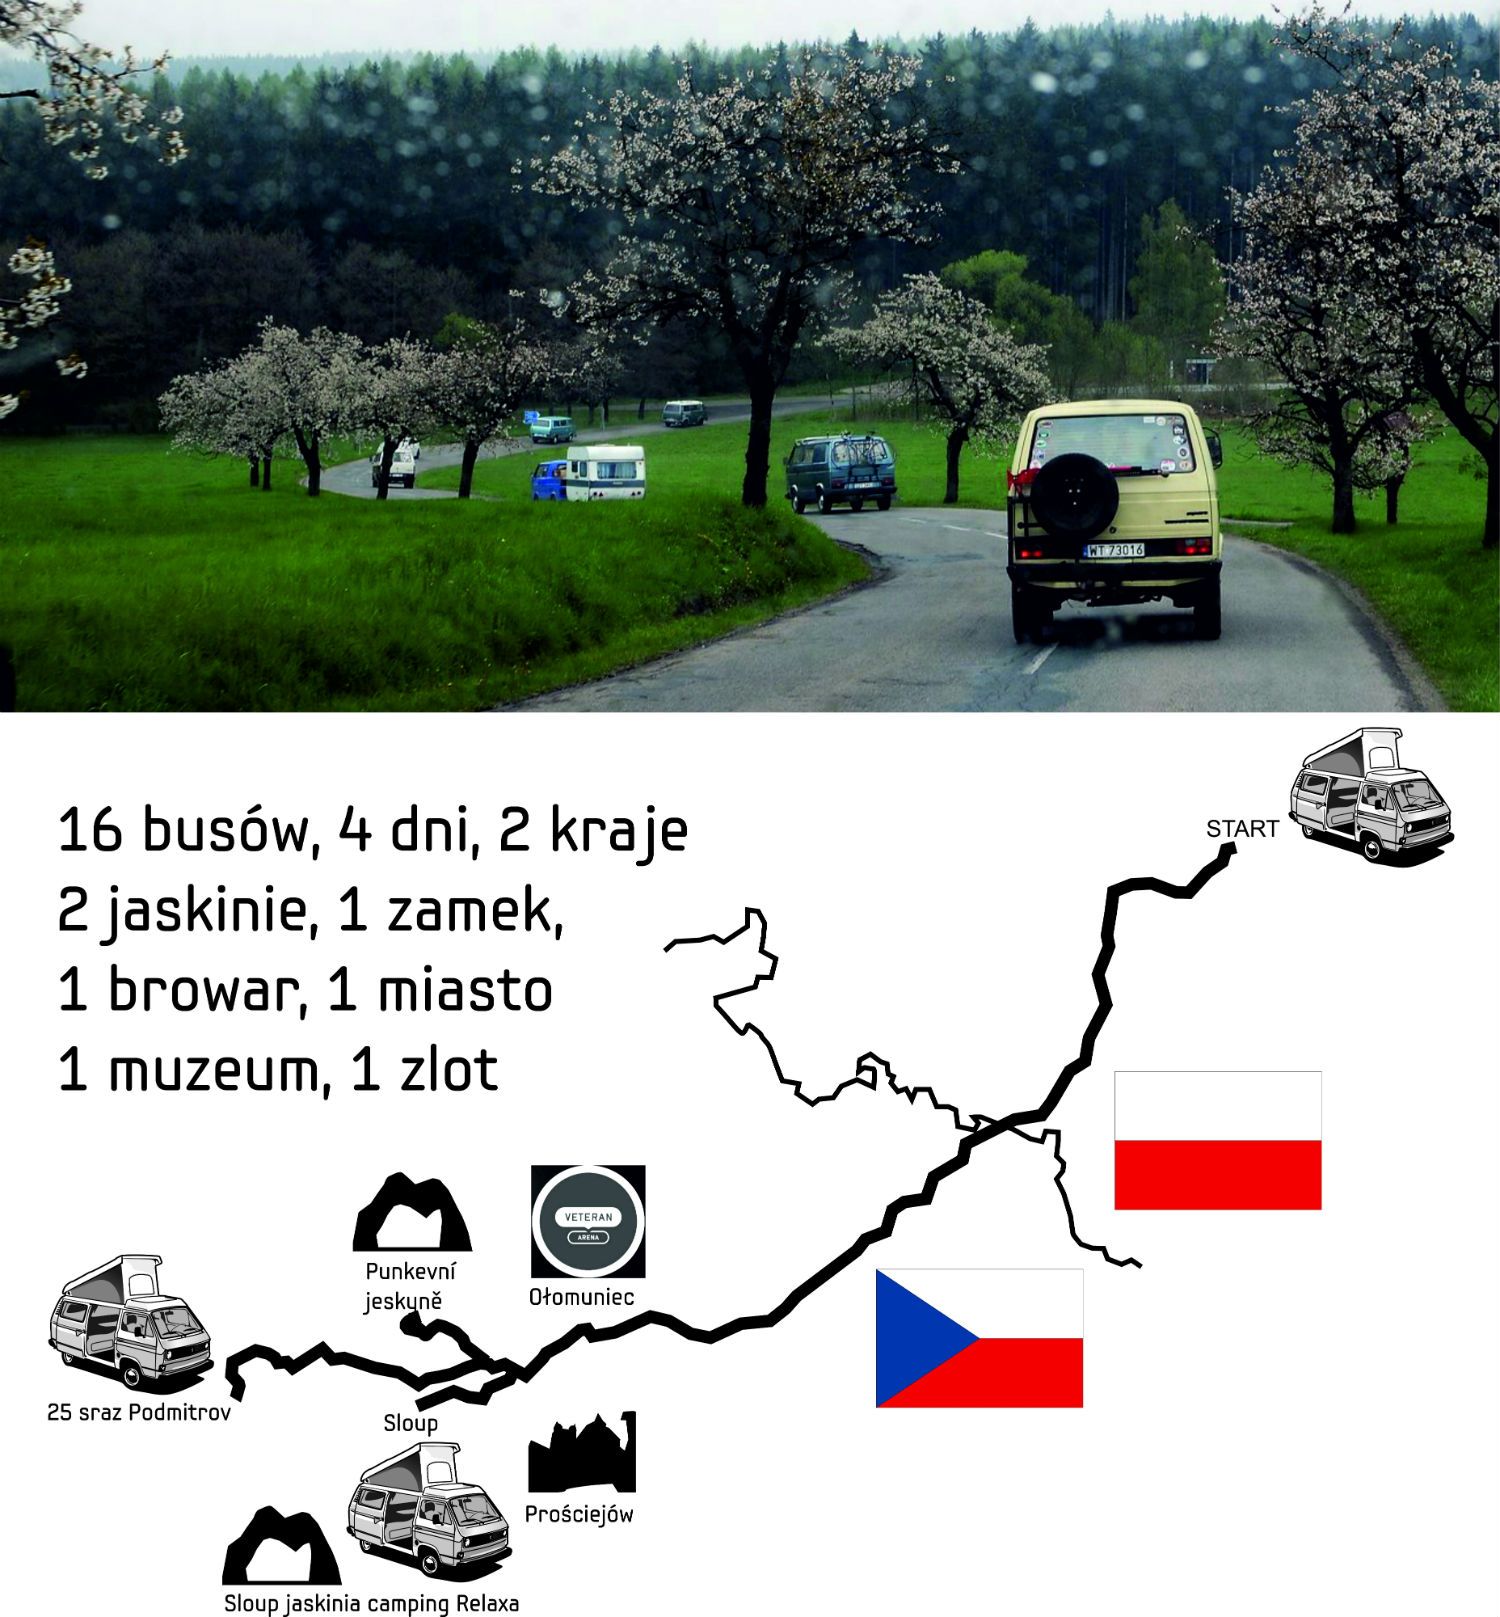 Czech Republic 2016 – main image